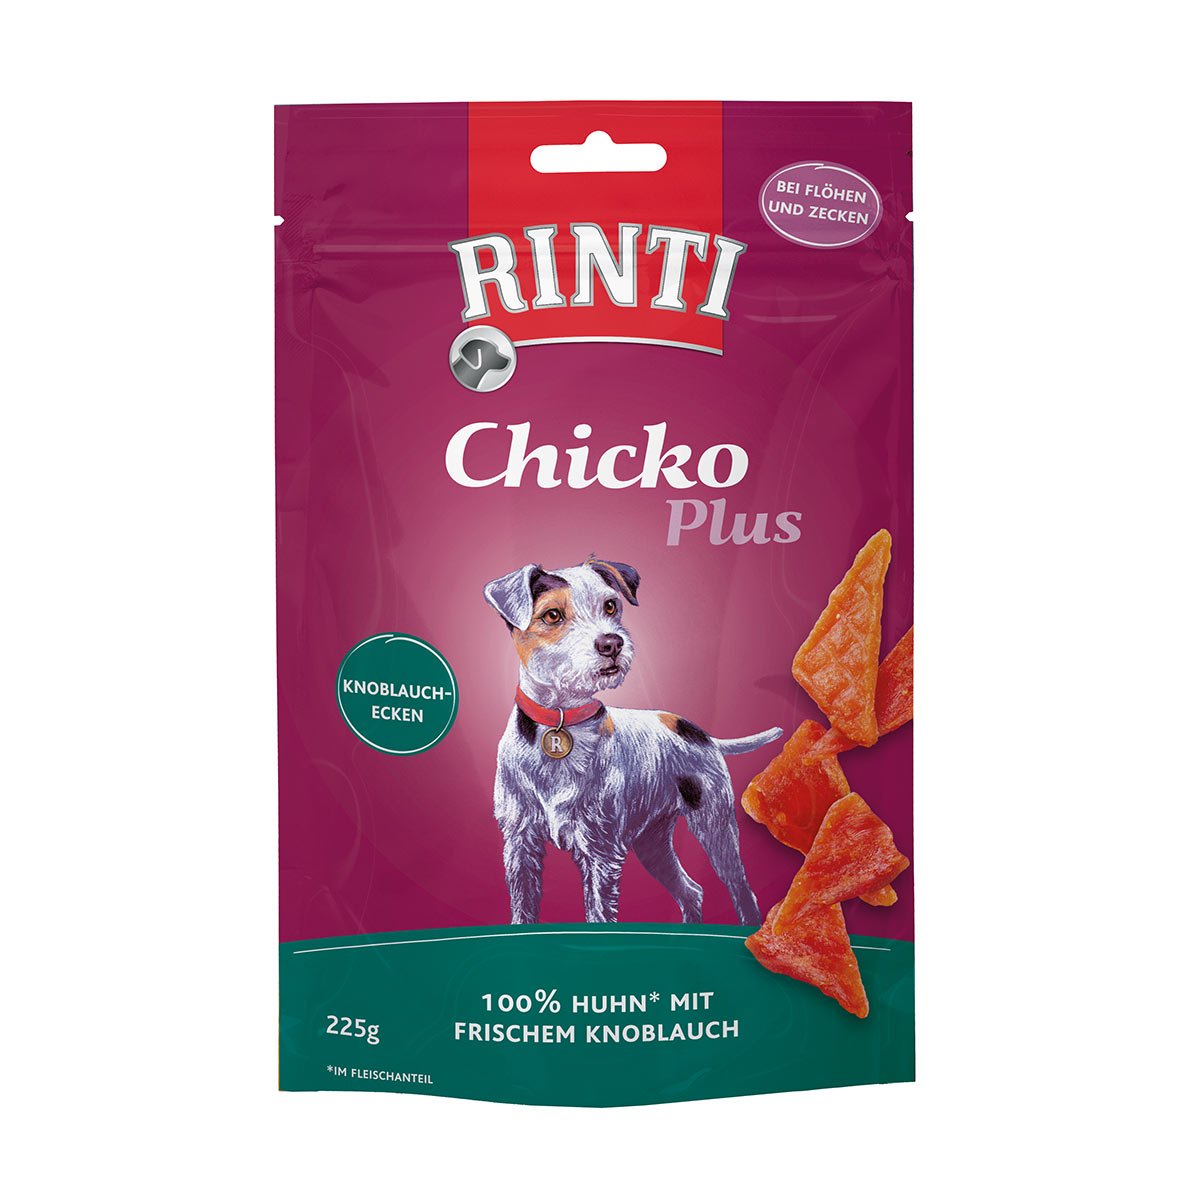 RINTI Chicko Plus Knoblauchecken 225g von Rinti